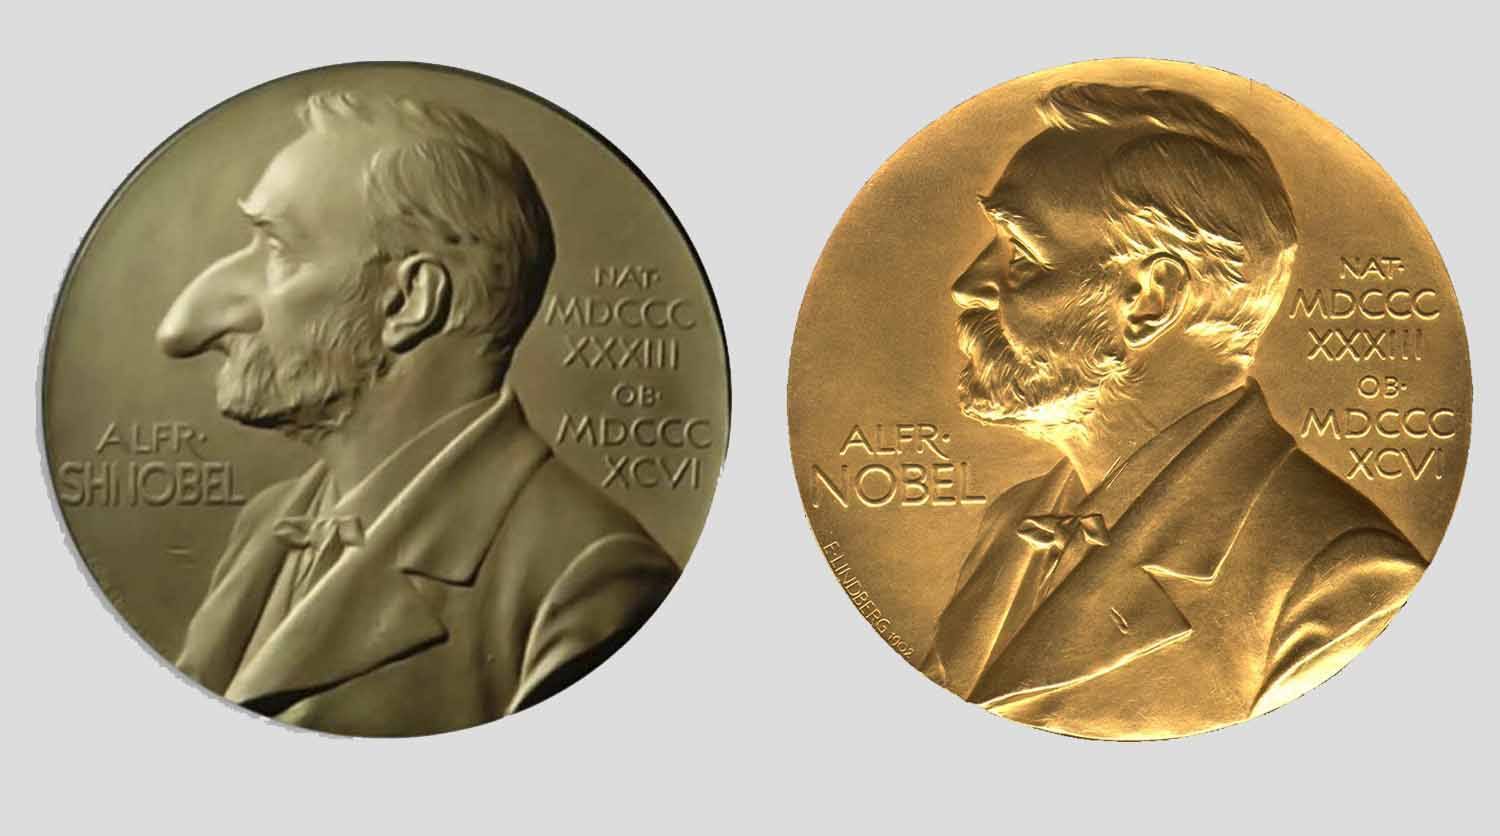 Die Preisträger bekannt gegeben Шнобелевской Award 2017